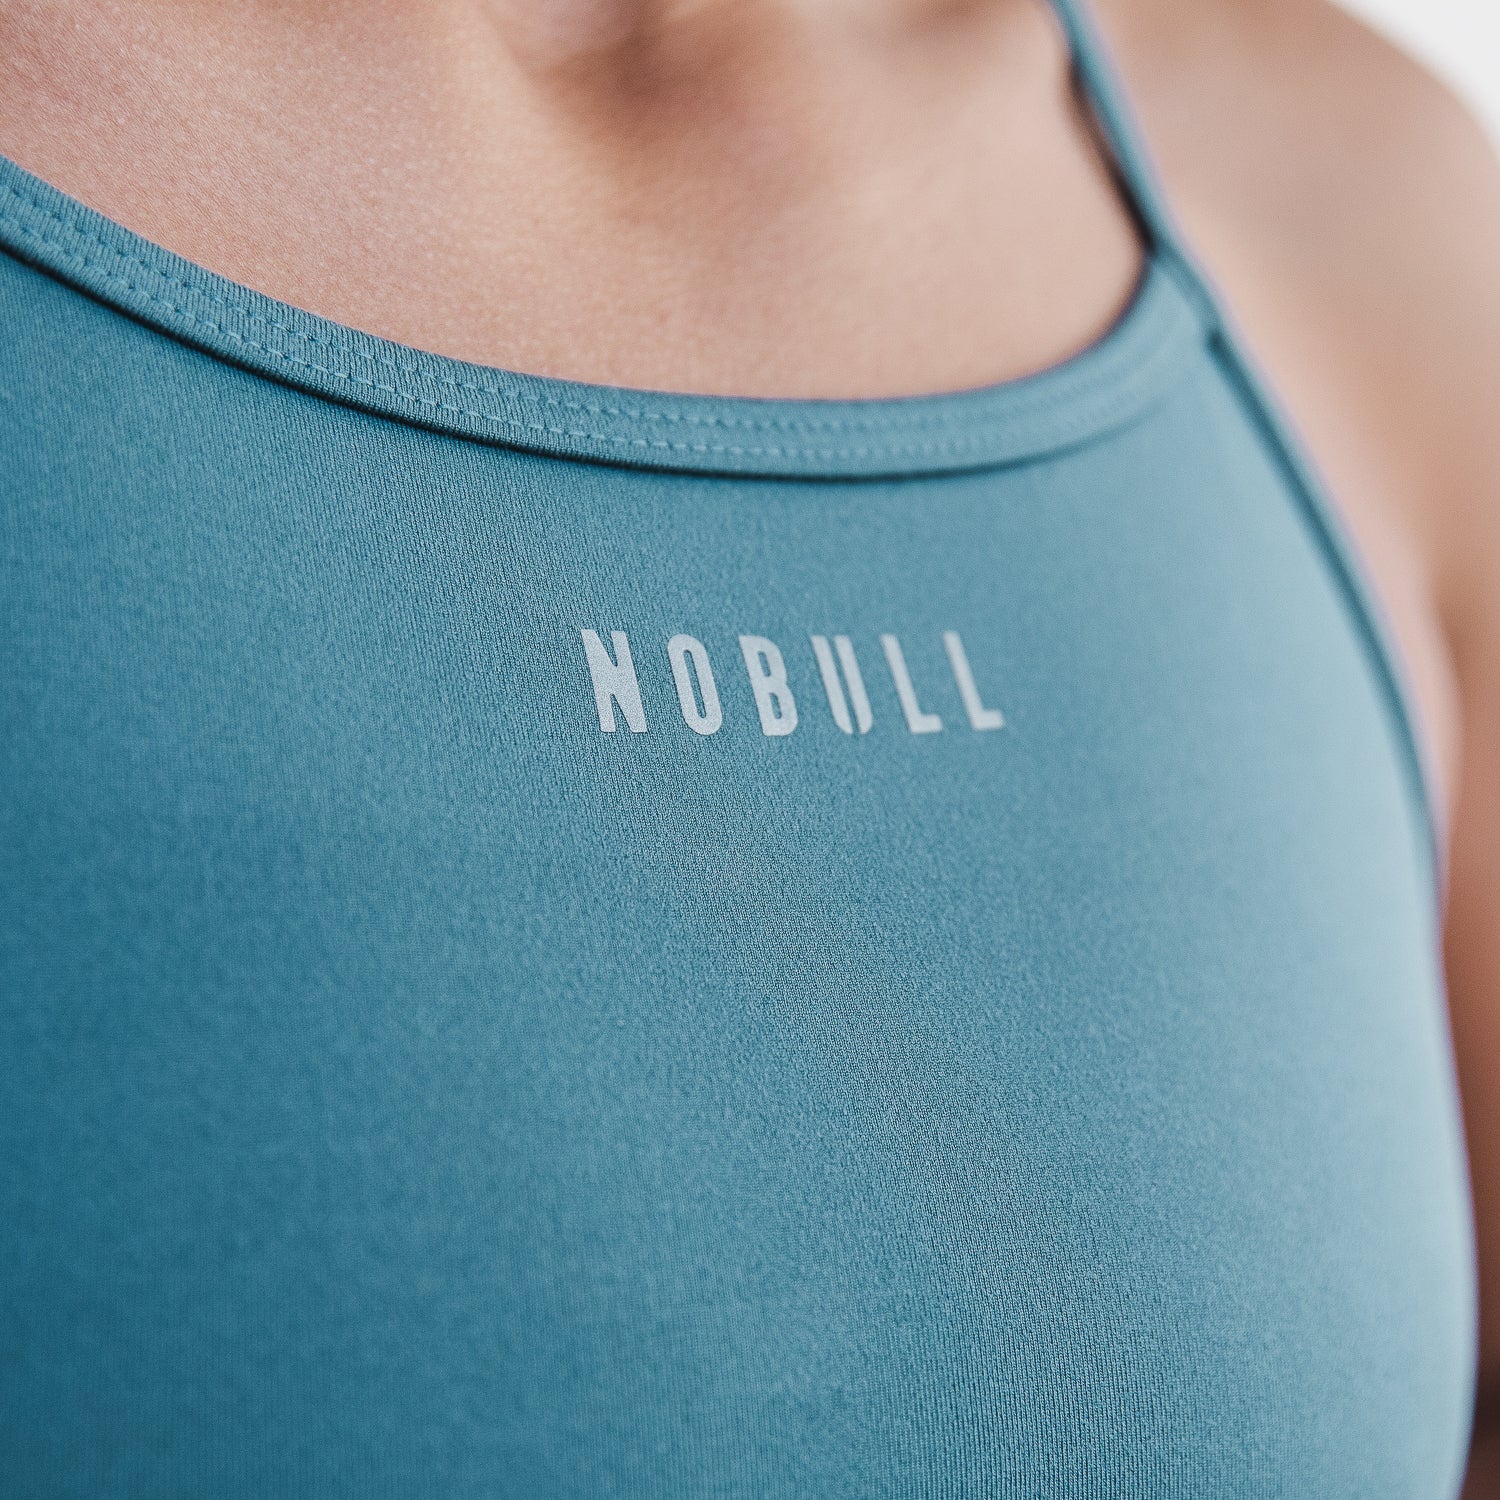 NoBull sports bras - Athletic apparel